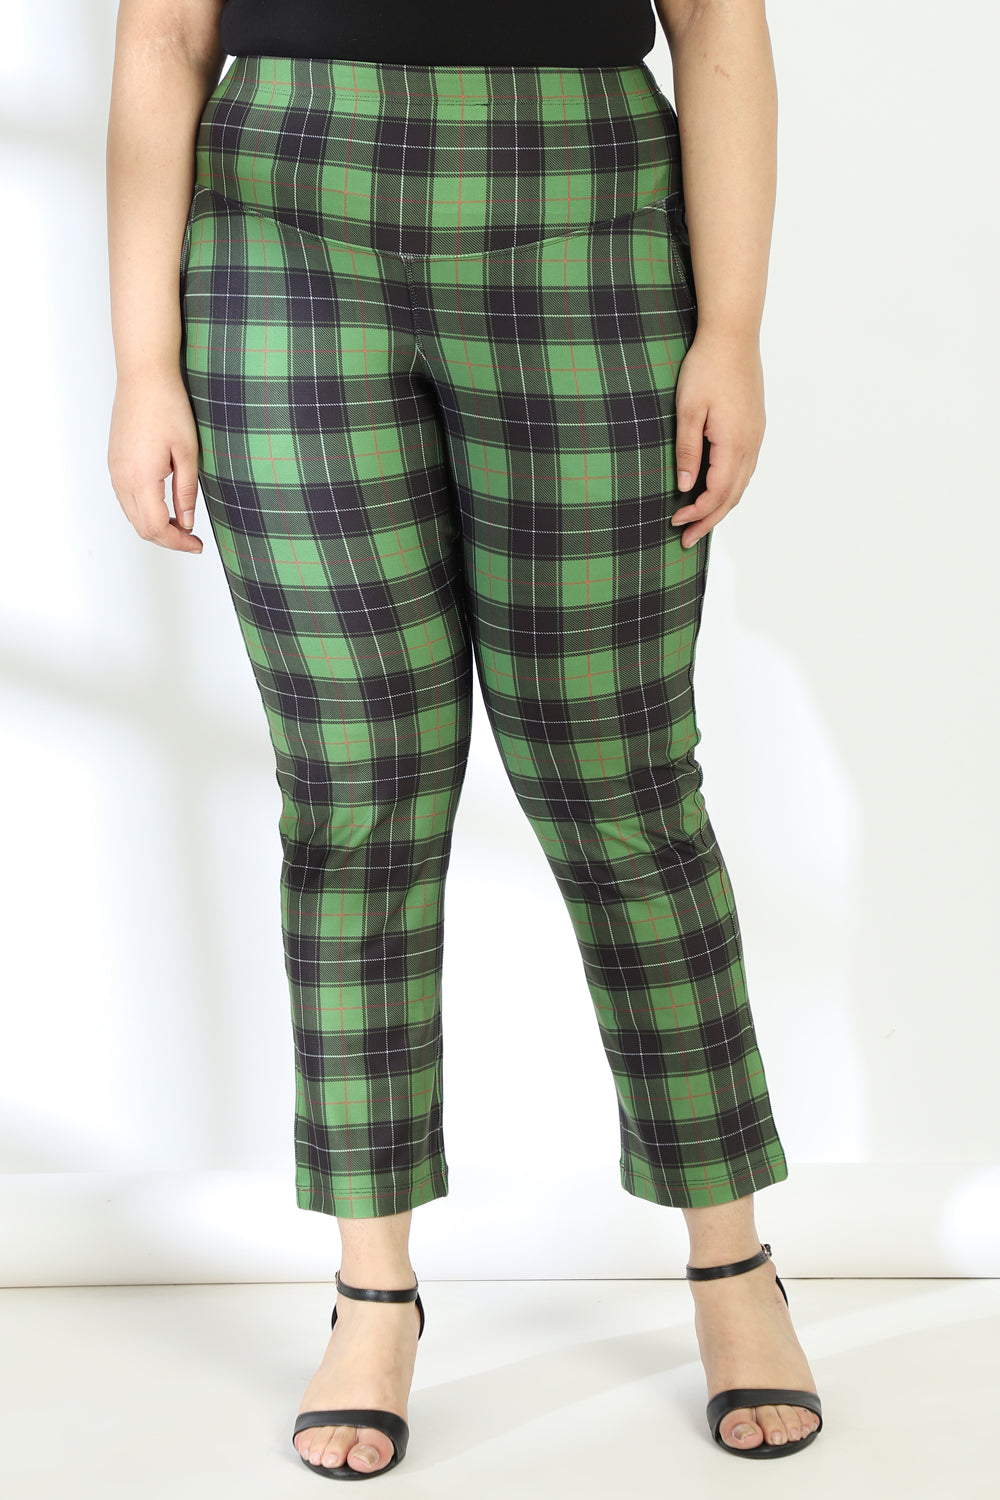 Buy Green Black Check Tummy Shaper Printed Pants